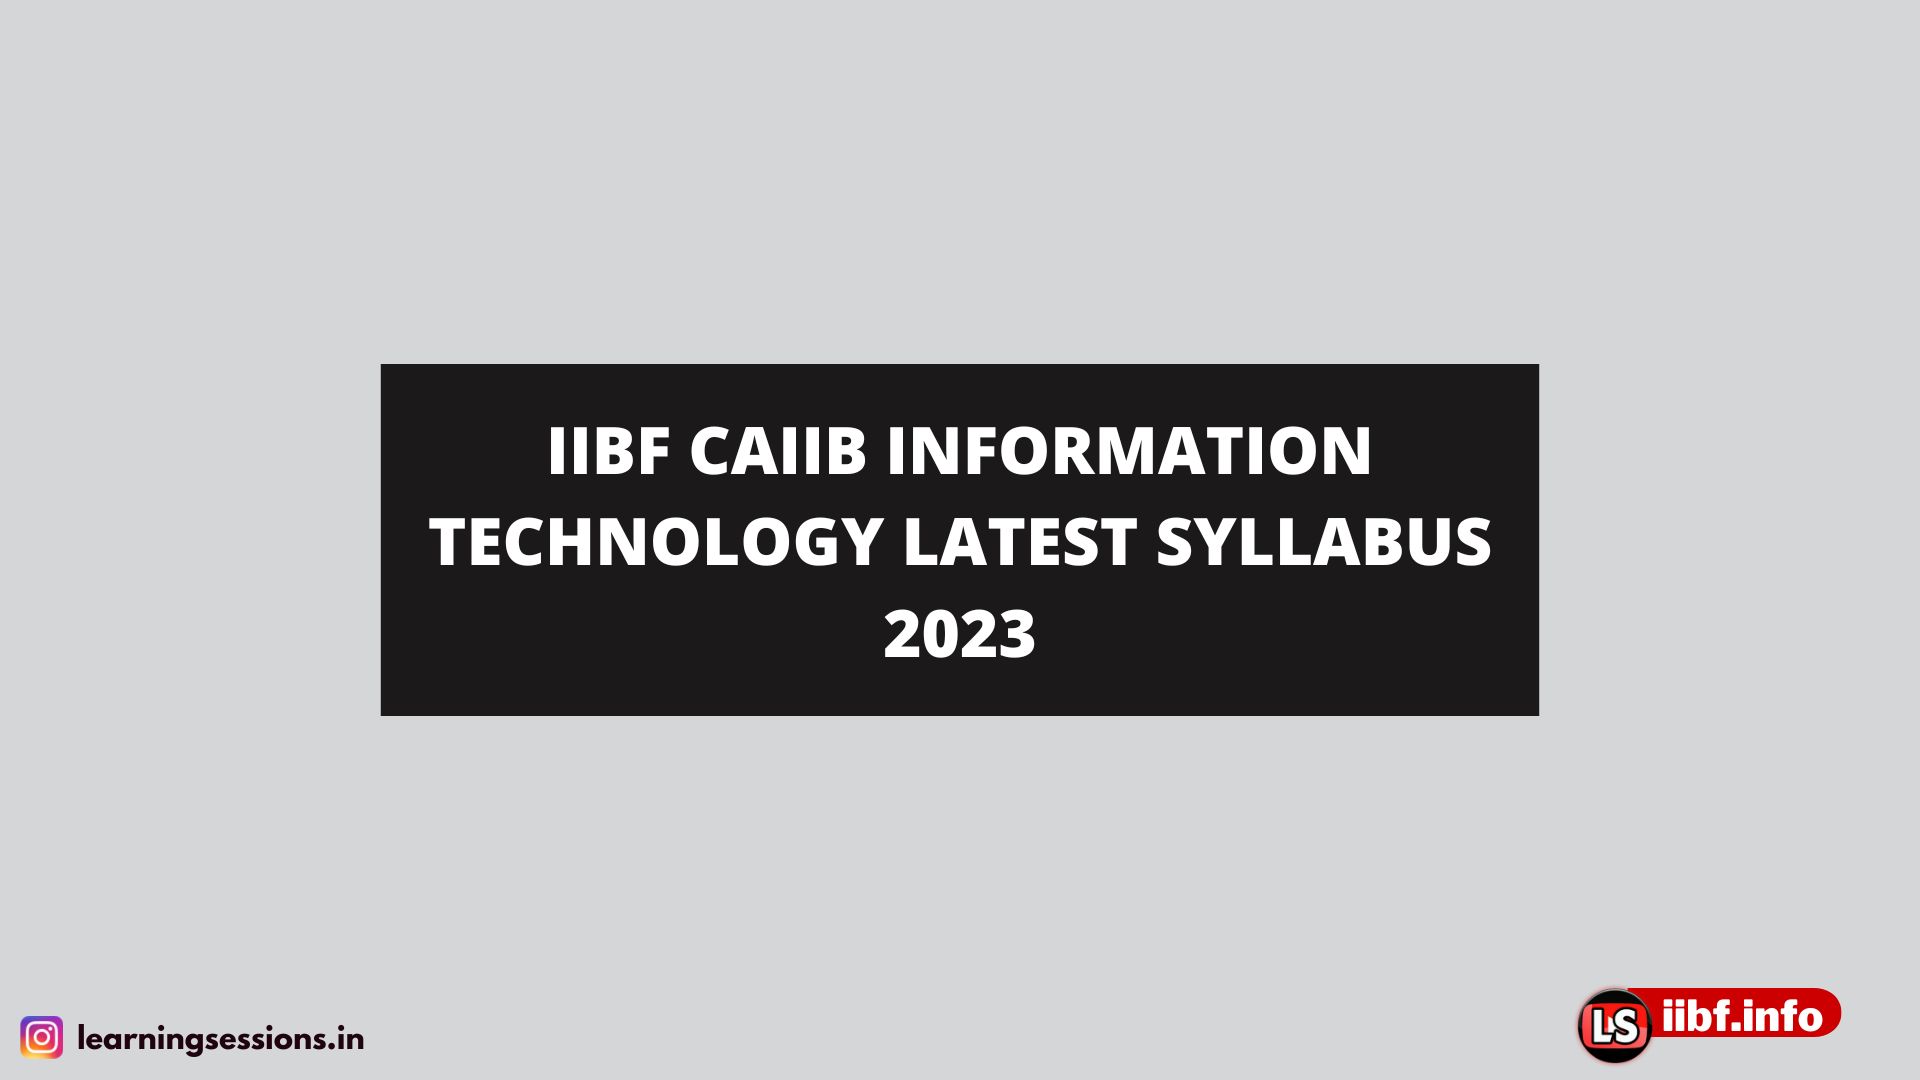 IIBF CAIIB INFORMATION TECHNOLOGY LATEST SYLLABUS 2023